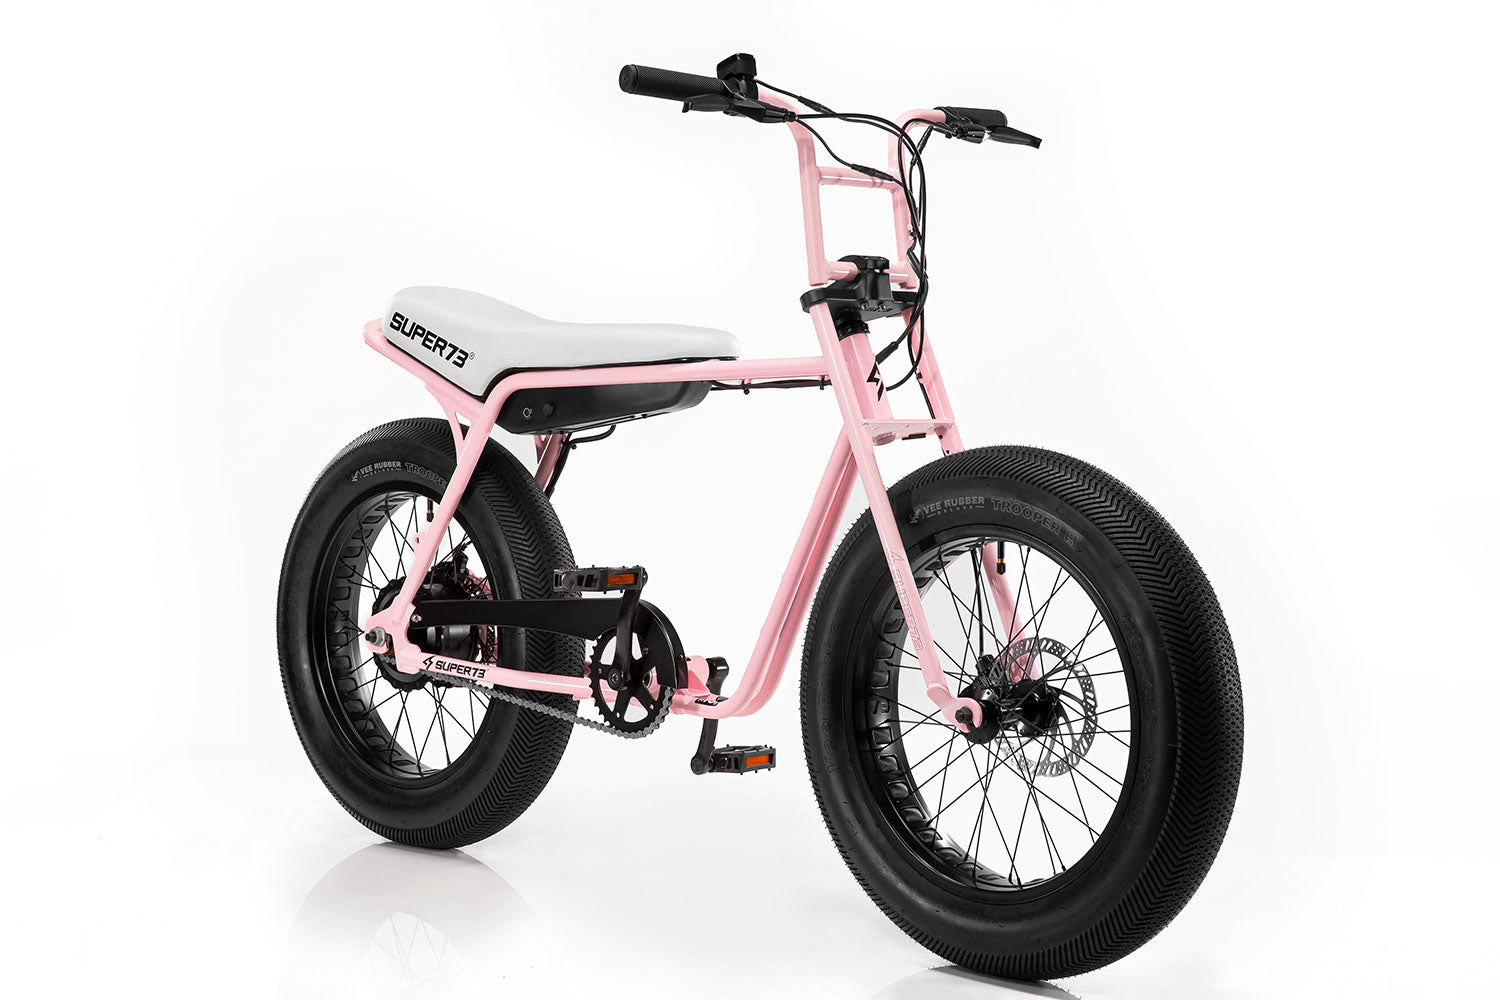 Angled studio shot of Pink bike model